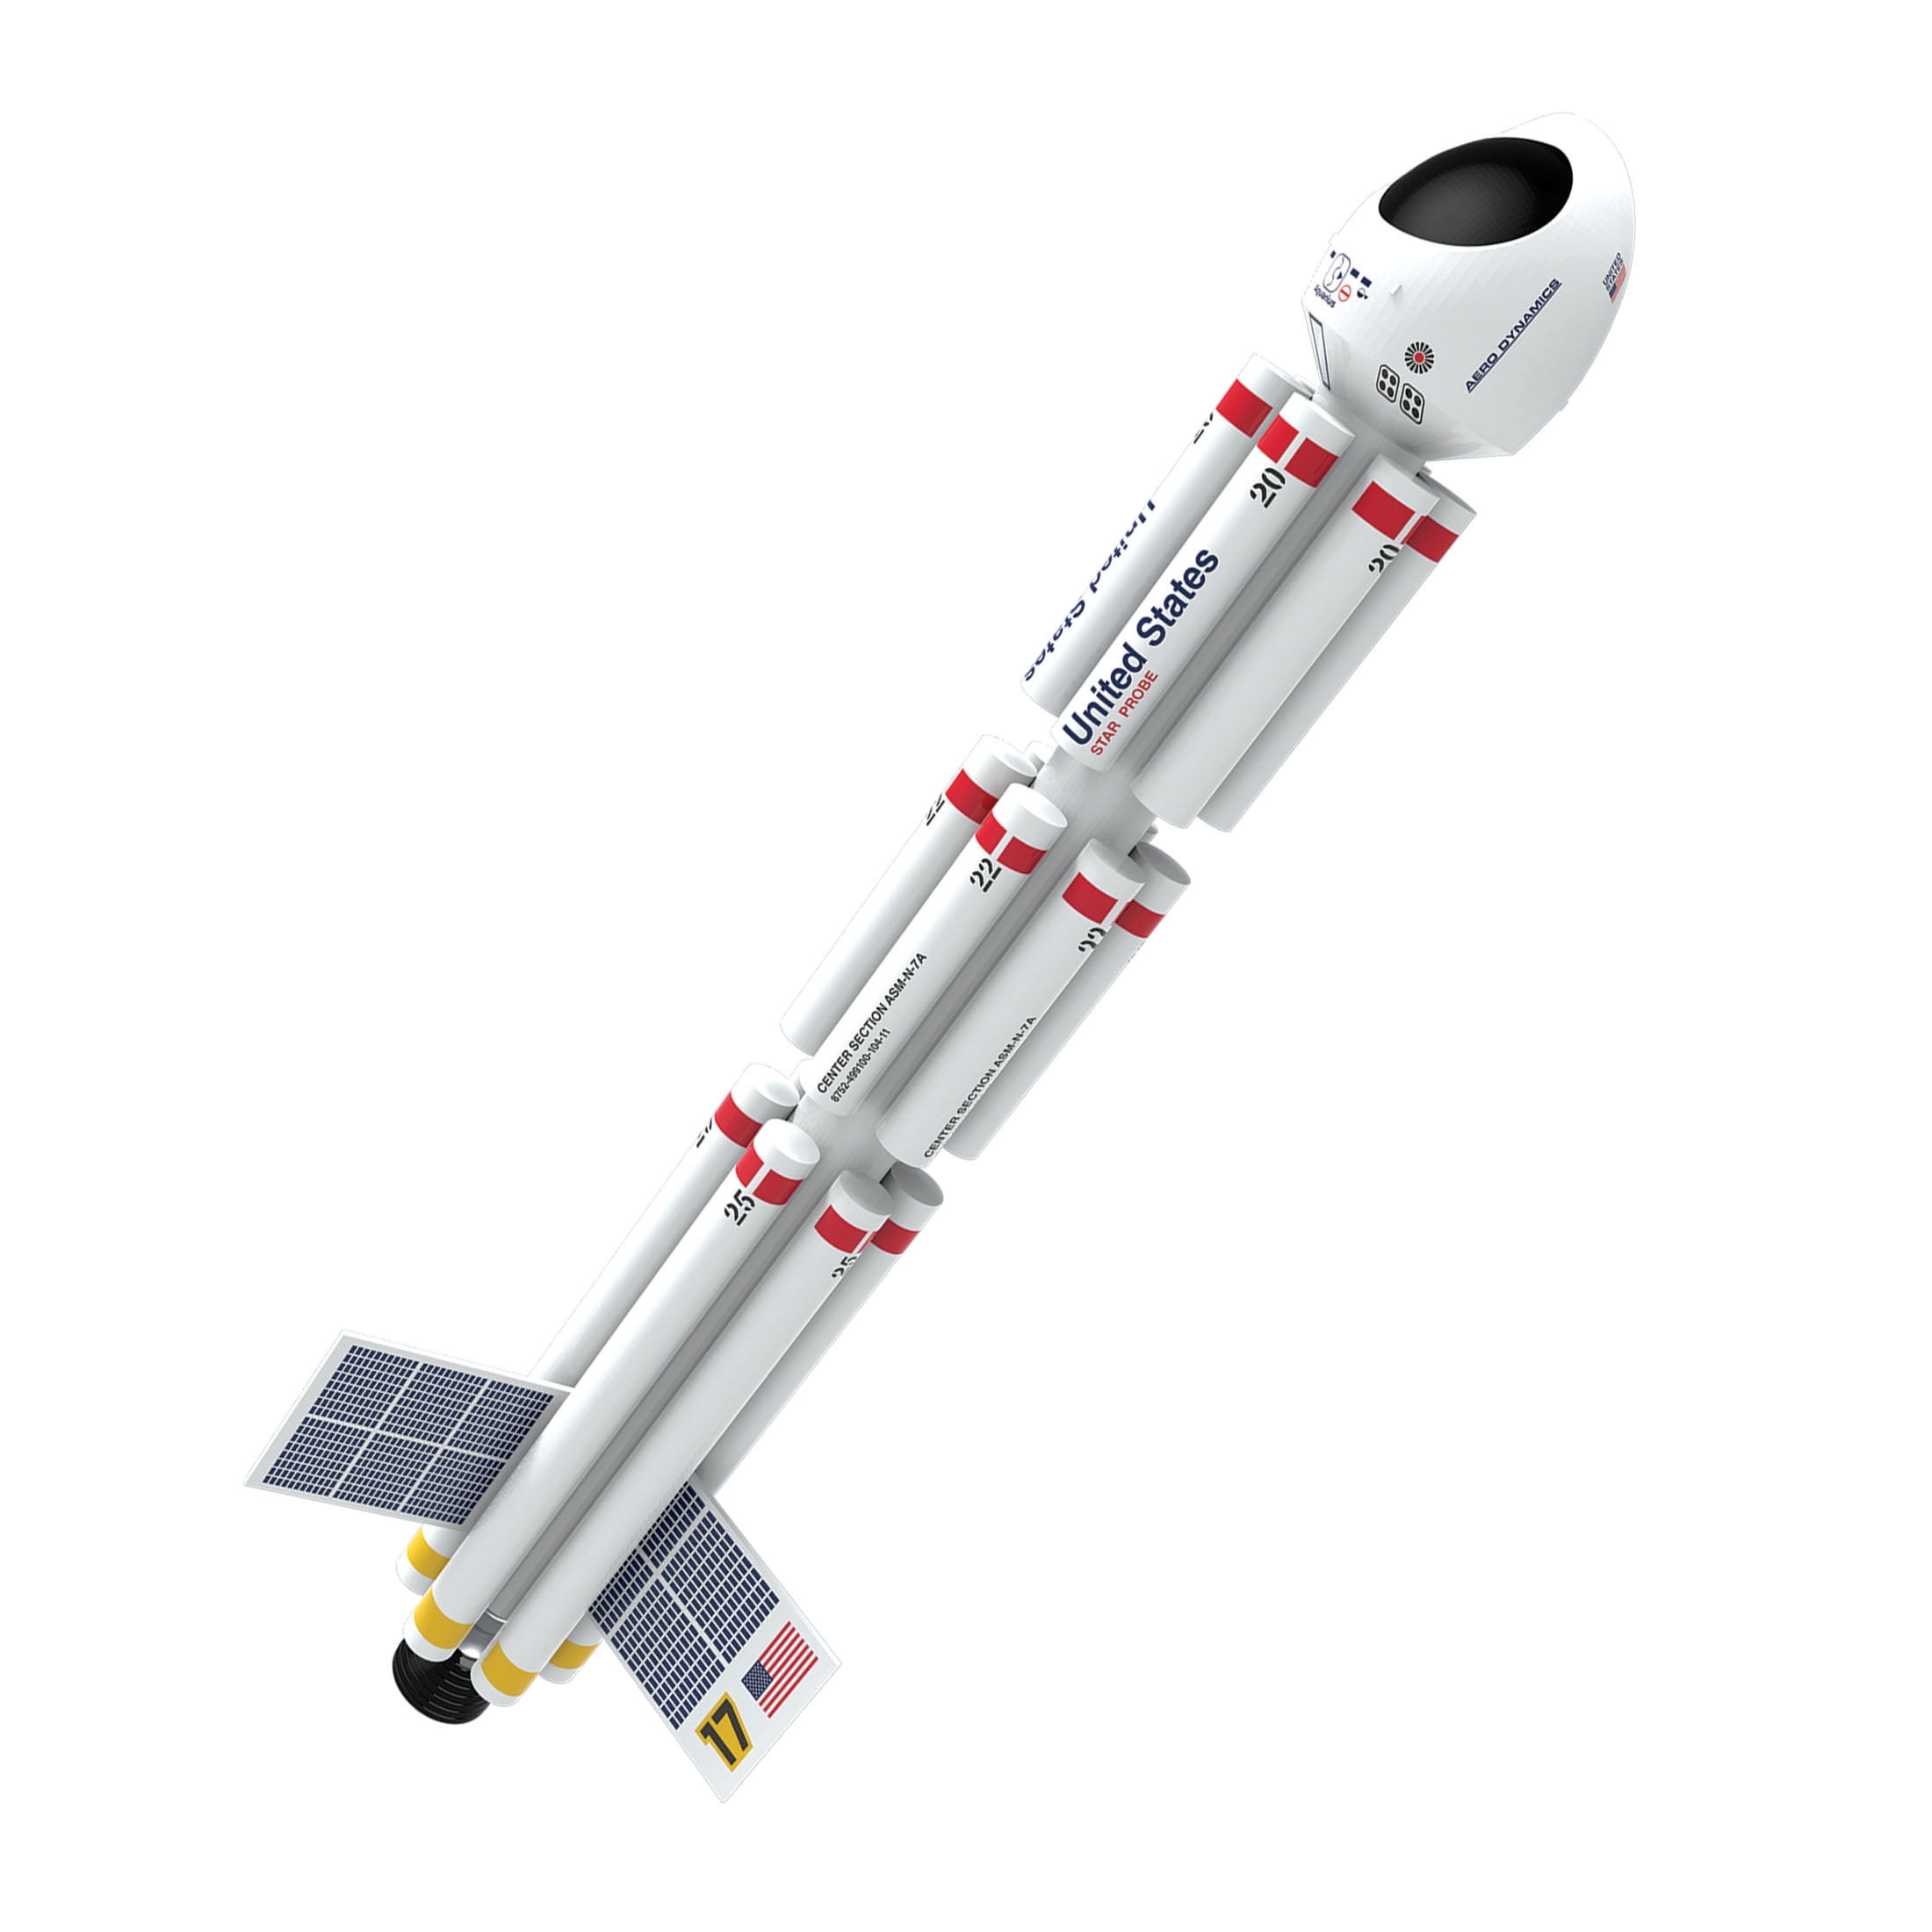 Estes Explorer Aquarius skill level 4 model rocket kit new 7253